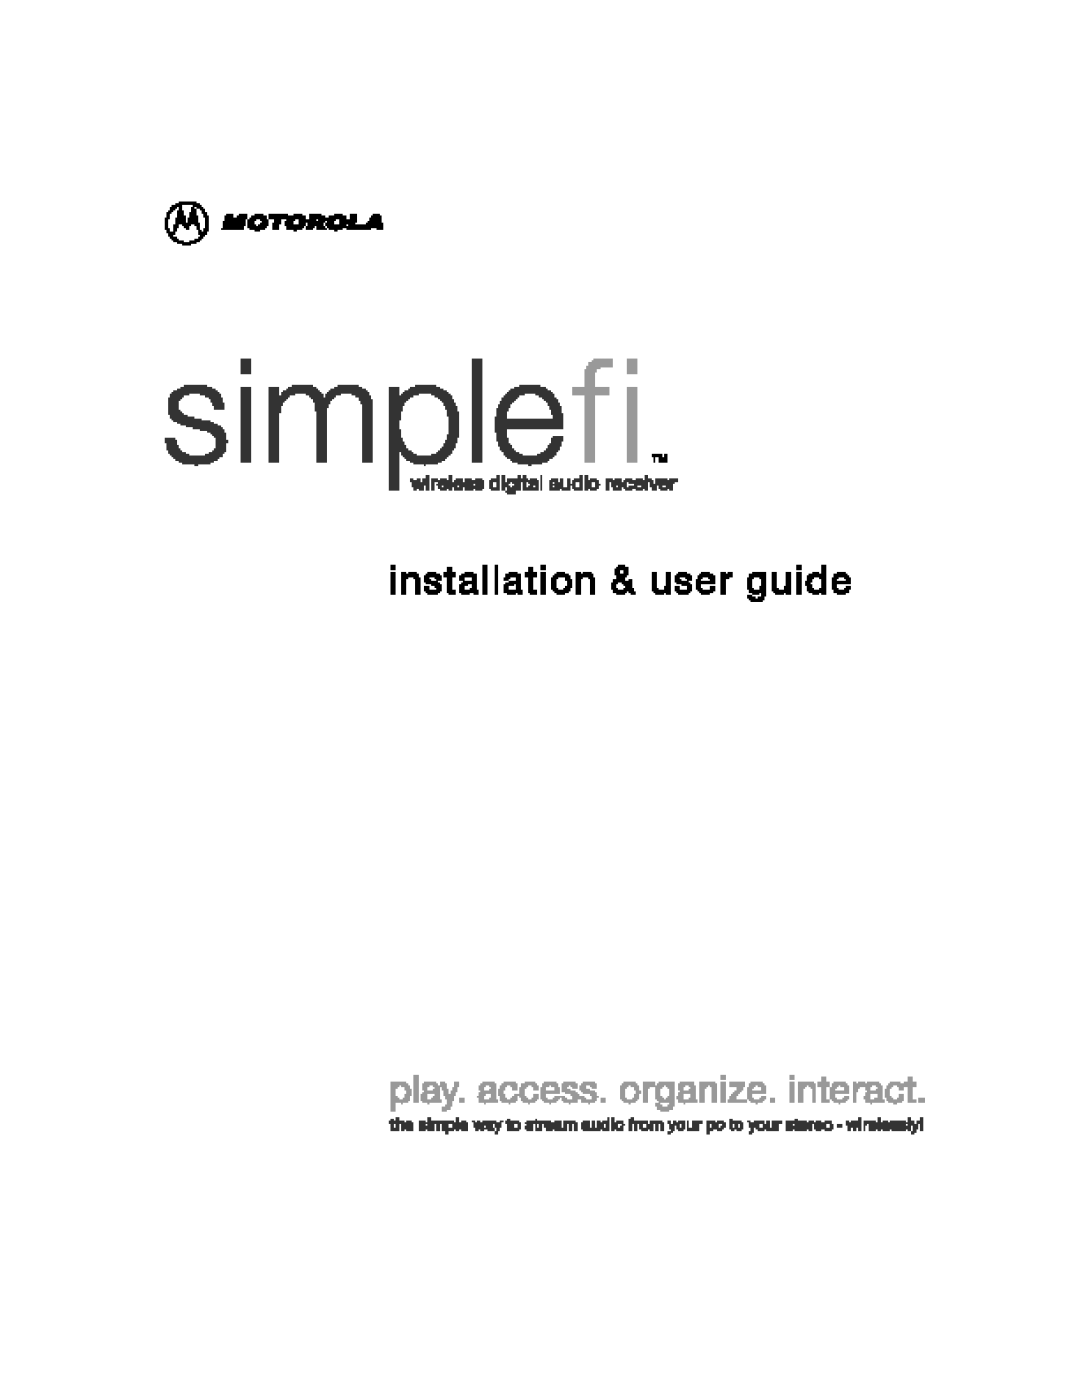 Motorola simplefi manual 